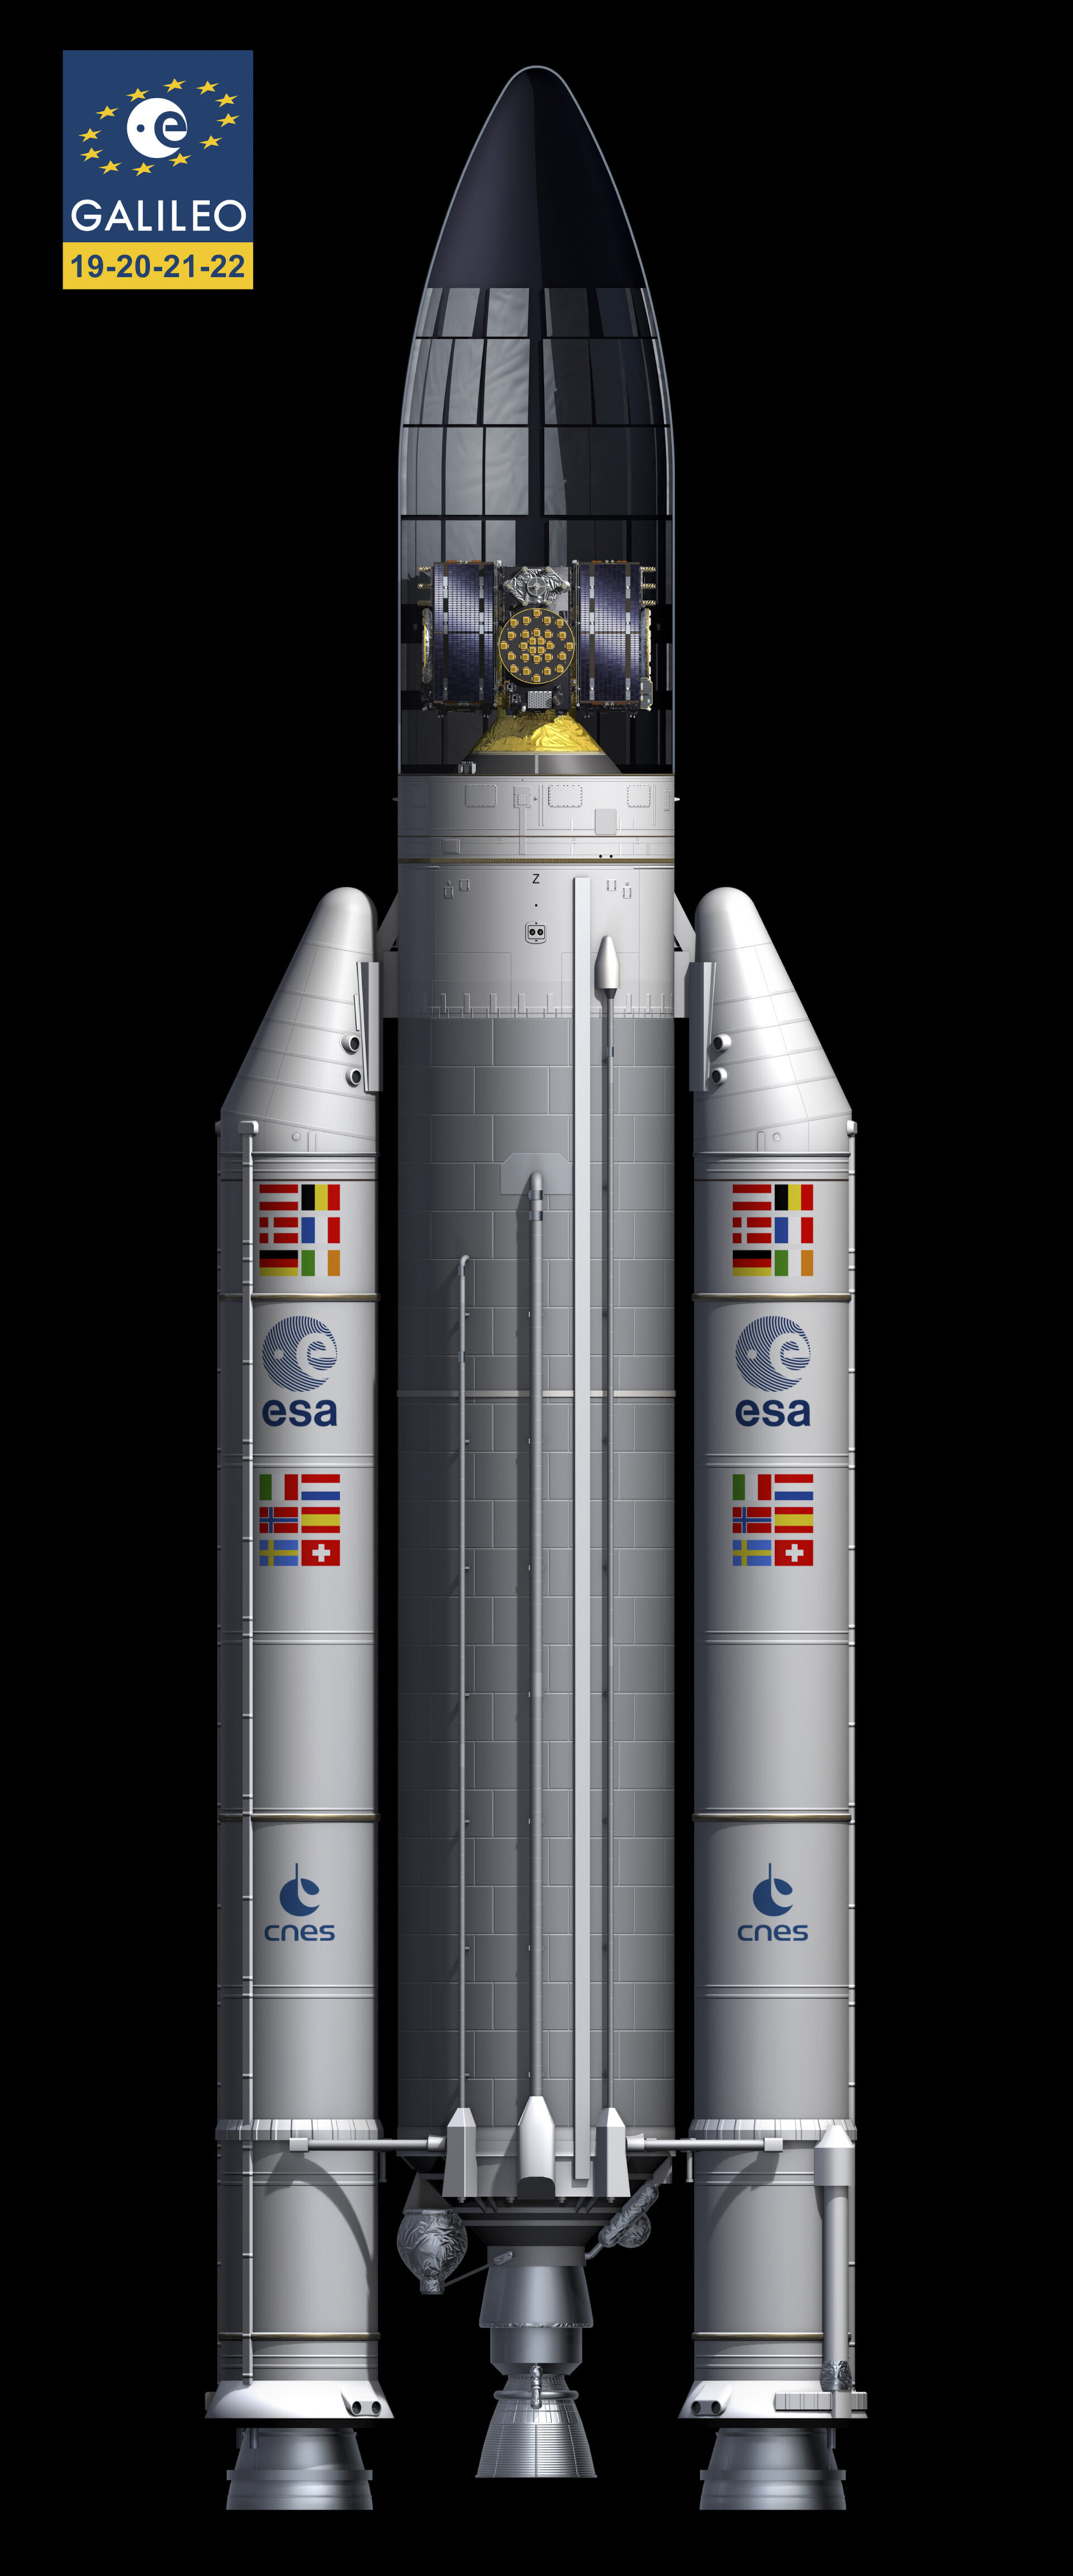 Galileos atop Ariane 5